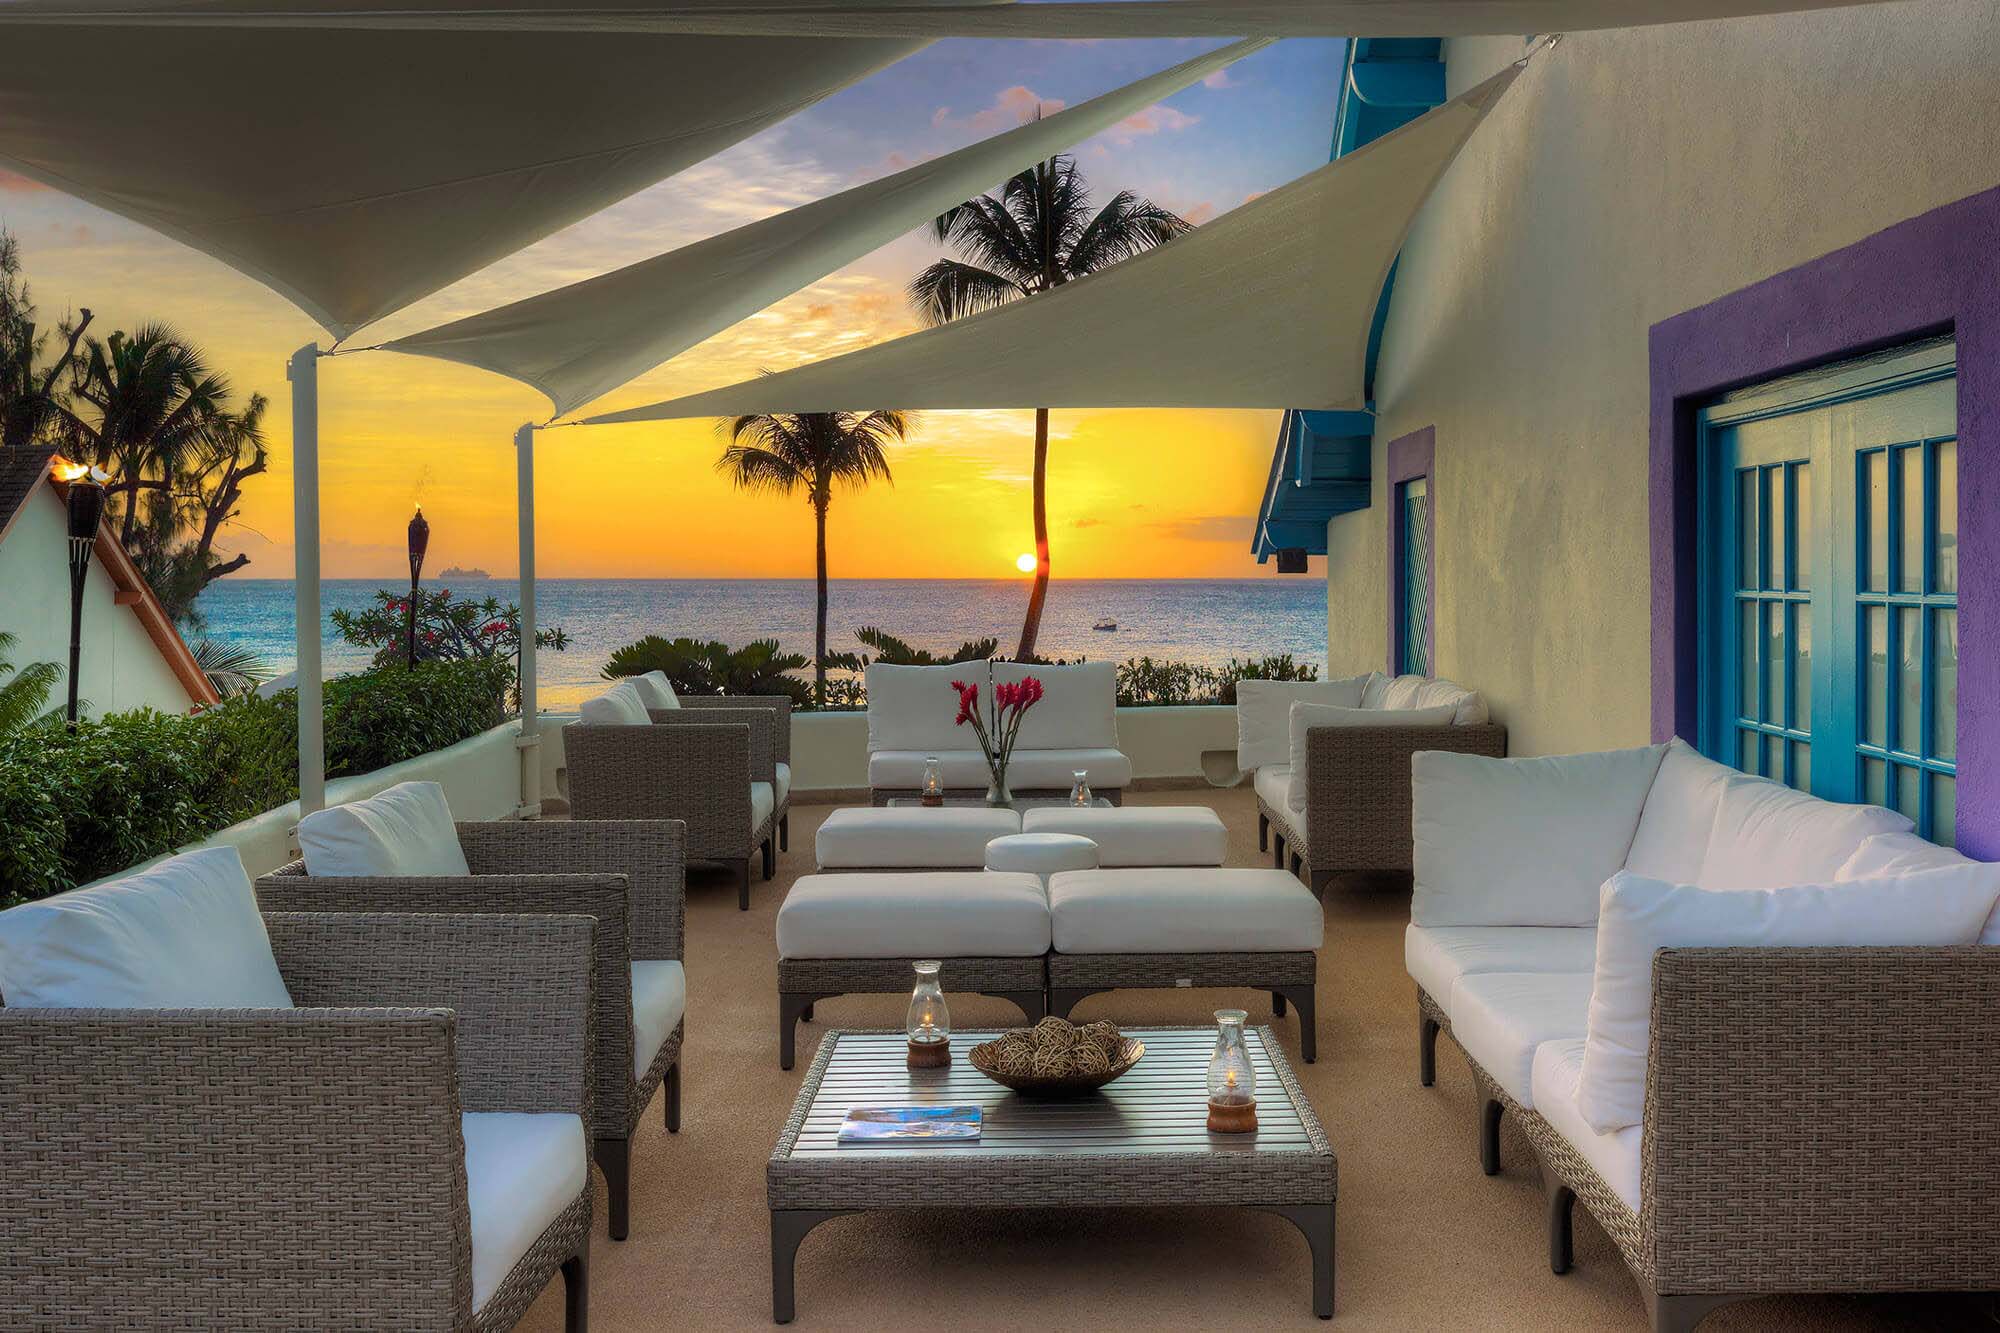 Elegant hotels Barbados,  Elegant Resorts Caribbean,  Elegant Resorts Barbados, the Elegant Hotels, elegant, Barbados Resorts, Barbados Luxury Hotels, Barbados Luxury Resorts, Elegant Hotels Group.